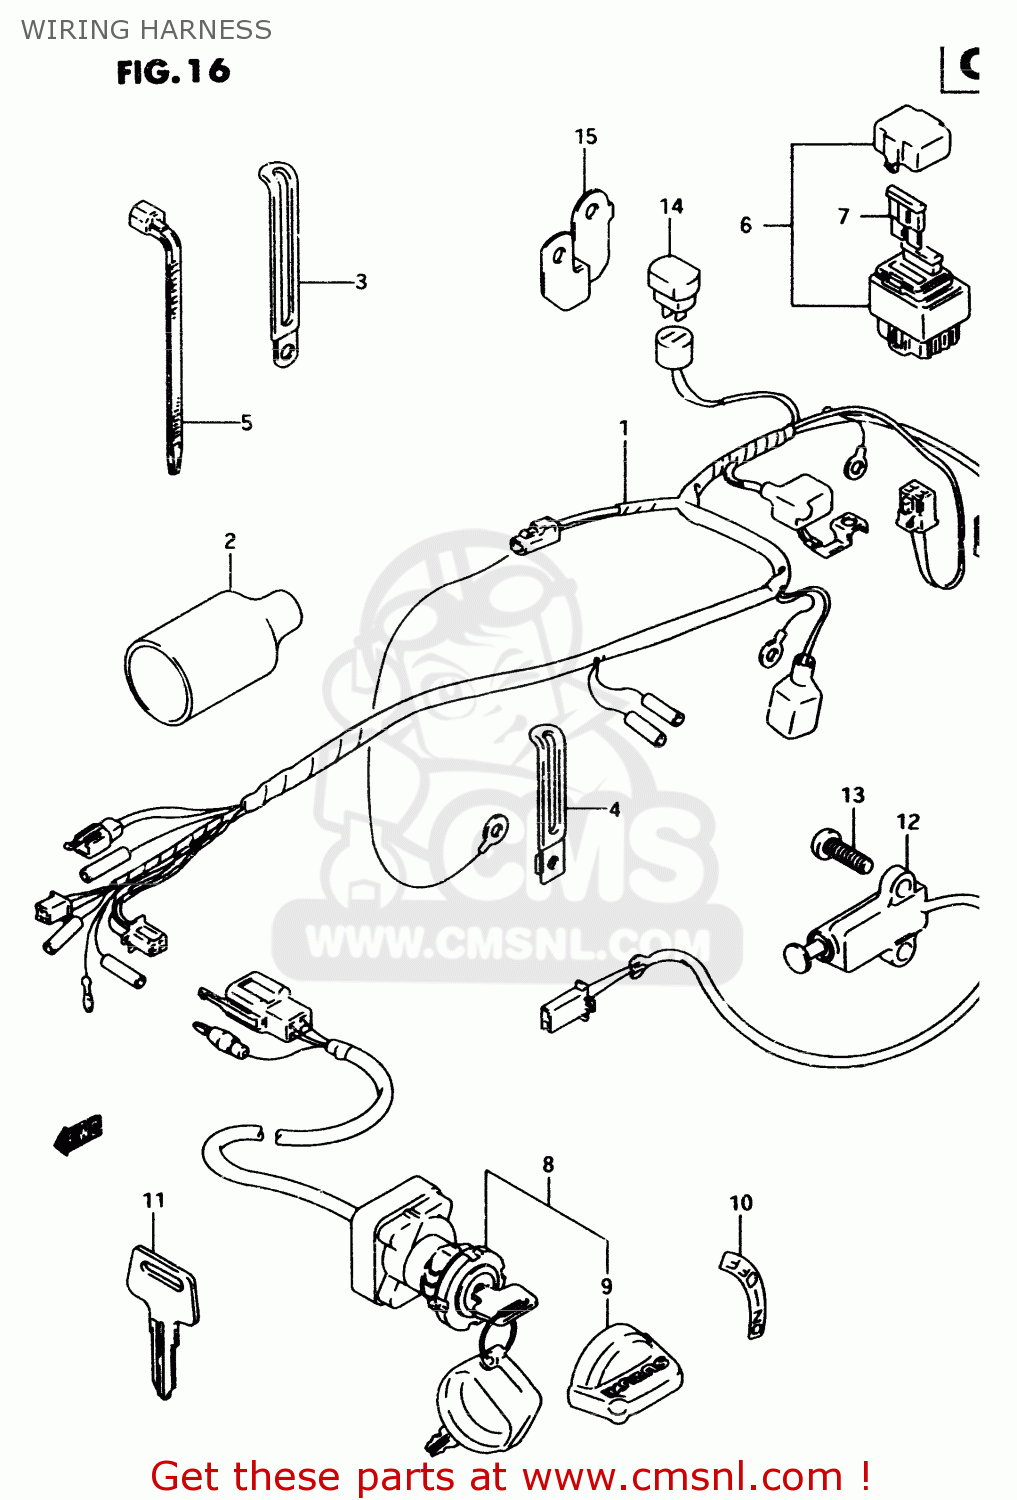 SWITCH ASSY, PARKING BRAKE for LT80 1996 (T) - order at CMSNL kawasaki bayou wiring diagram free download schematic 